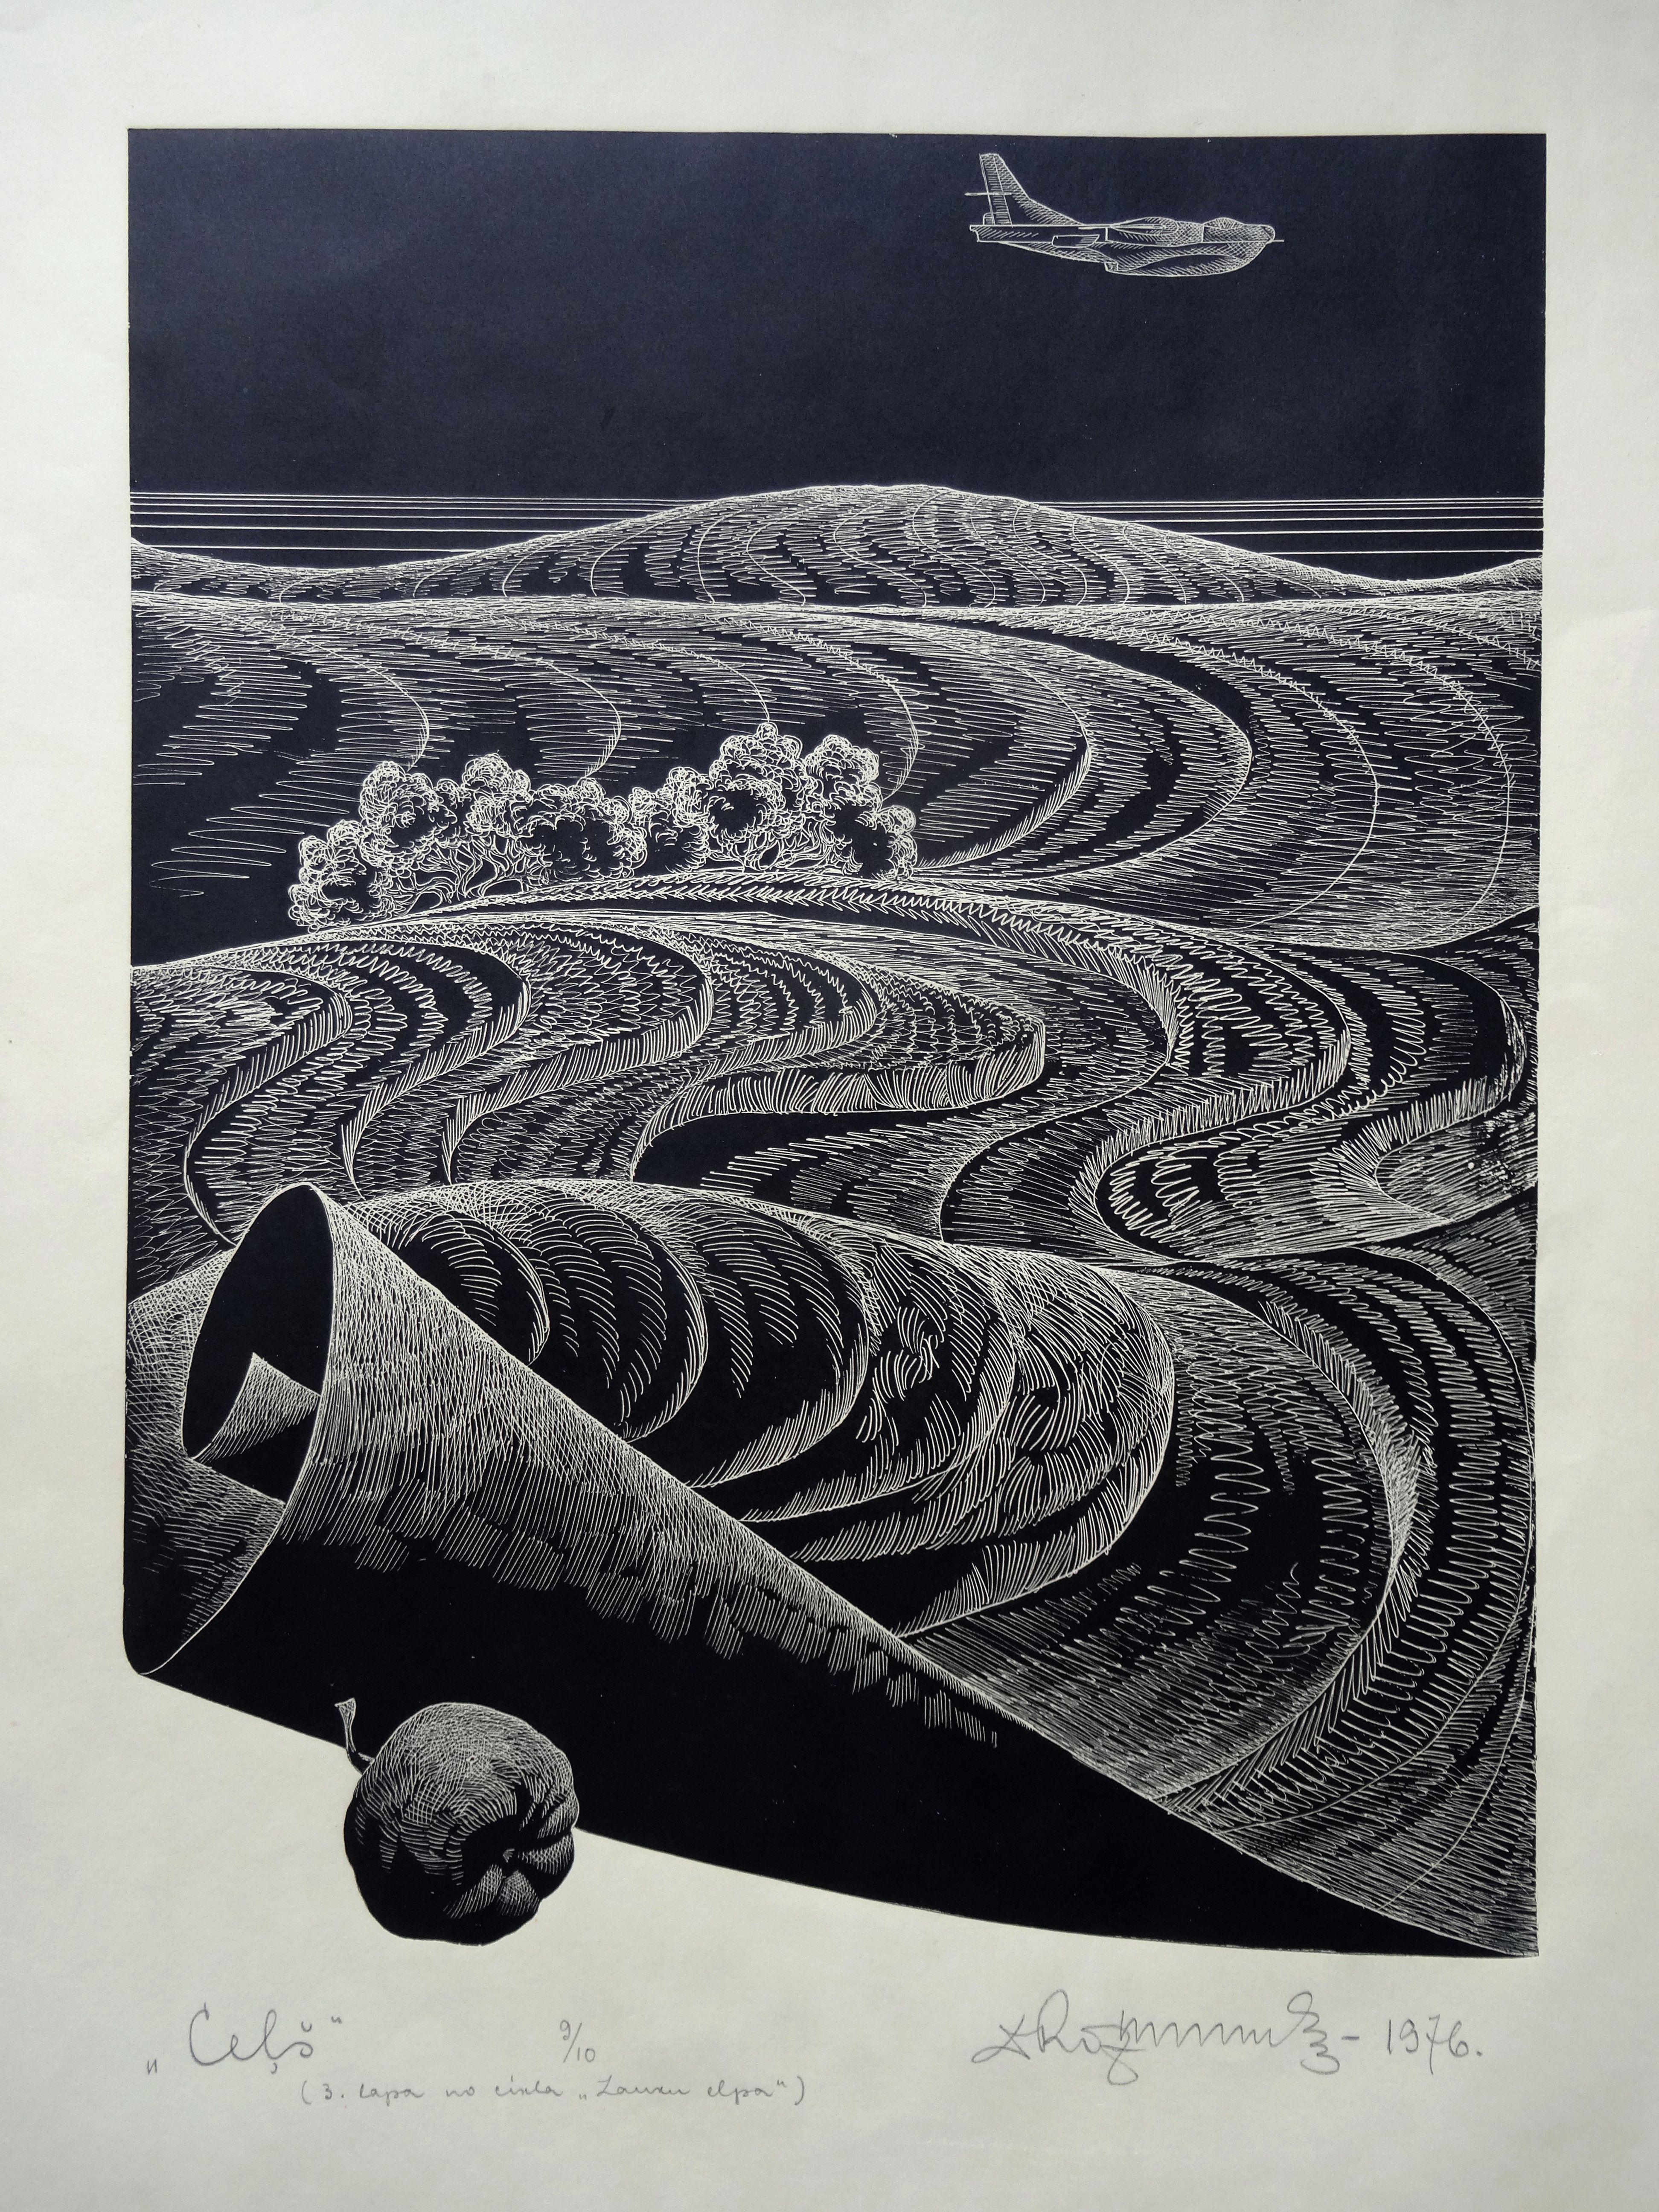 Dainis Rozkalns Abstract Print – Weg. 1976, Linolschnitt, Druckgröße 65x50 cm; insgesamt 75x60 cm